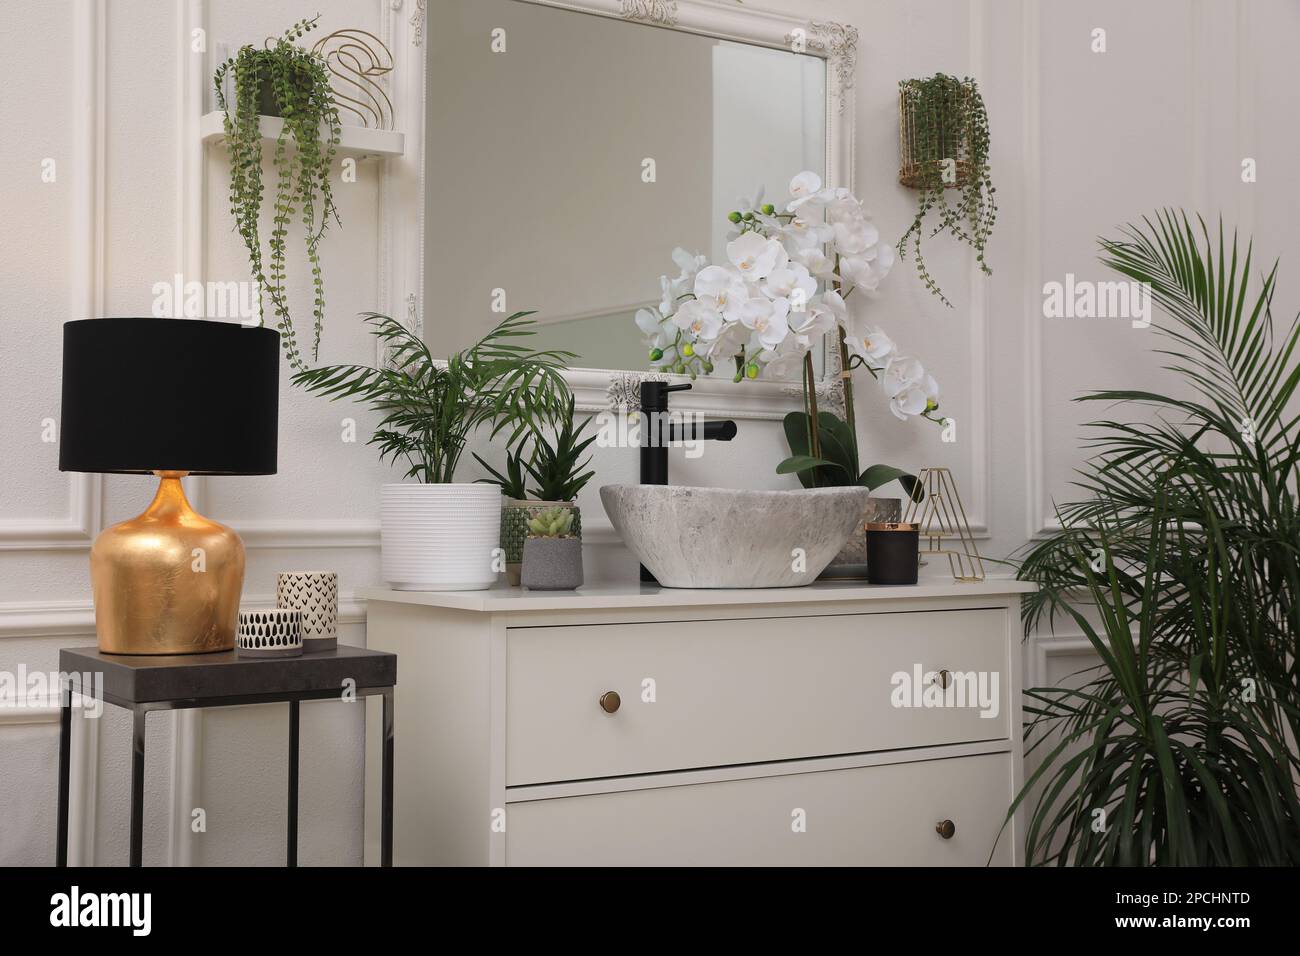 Stylish bathroom interior with modern furniture and beautiful houseplants Stock Photo